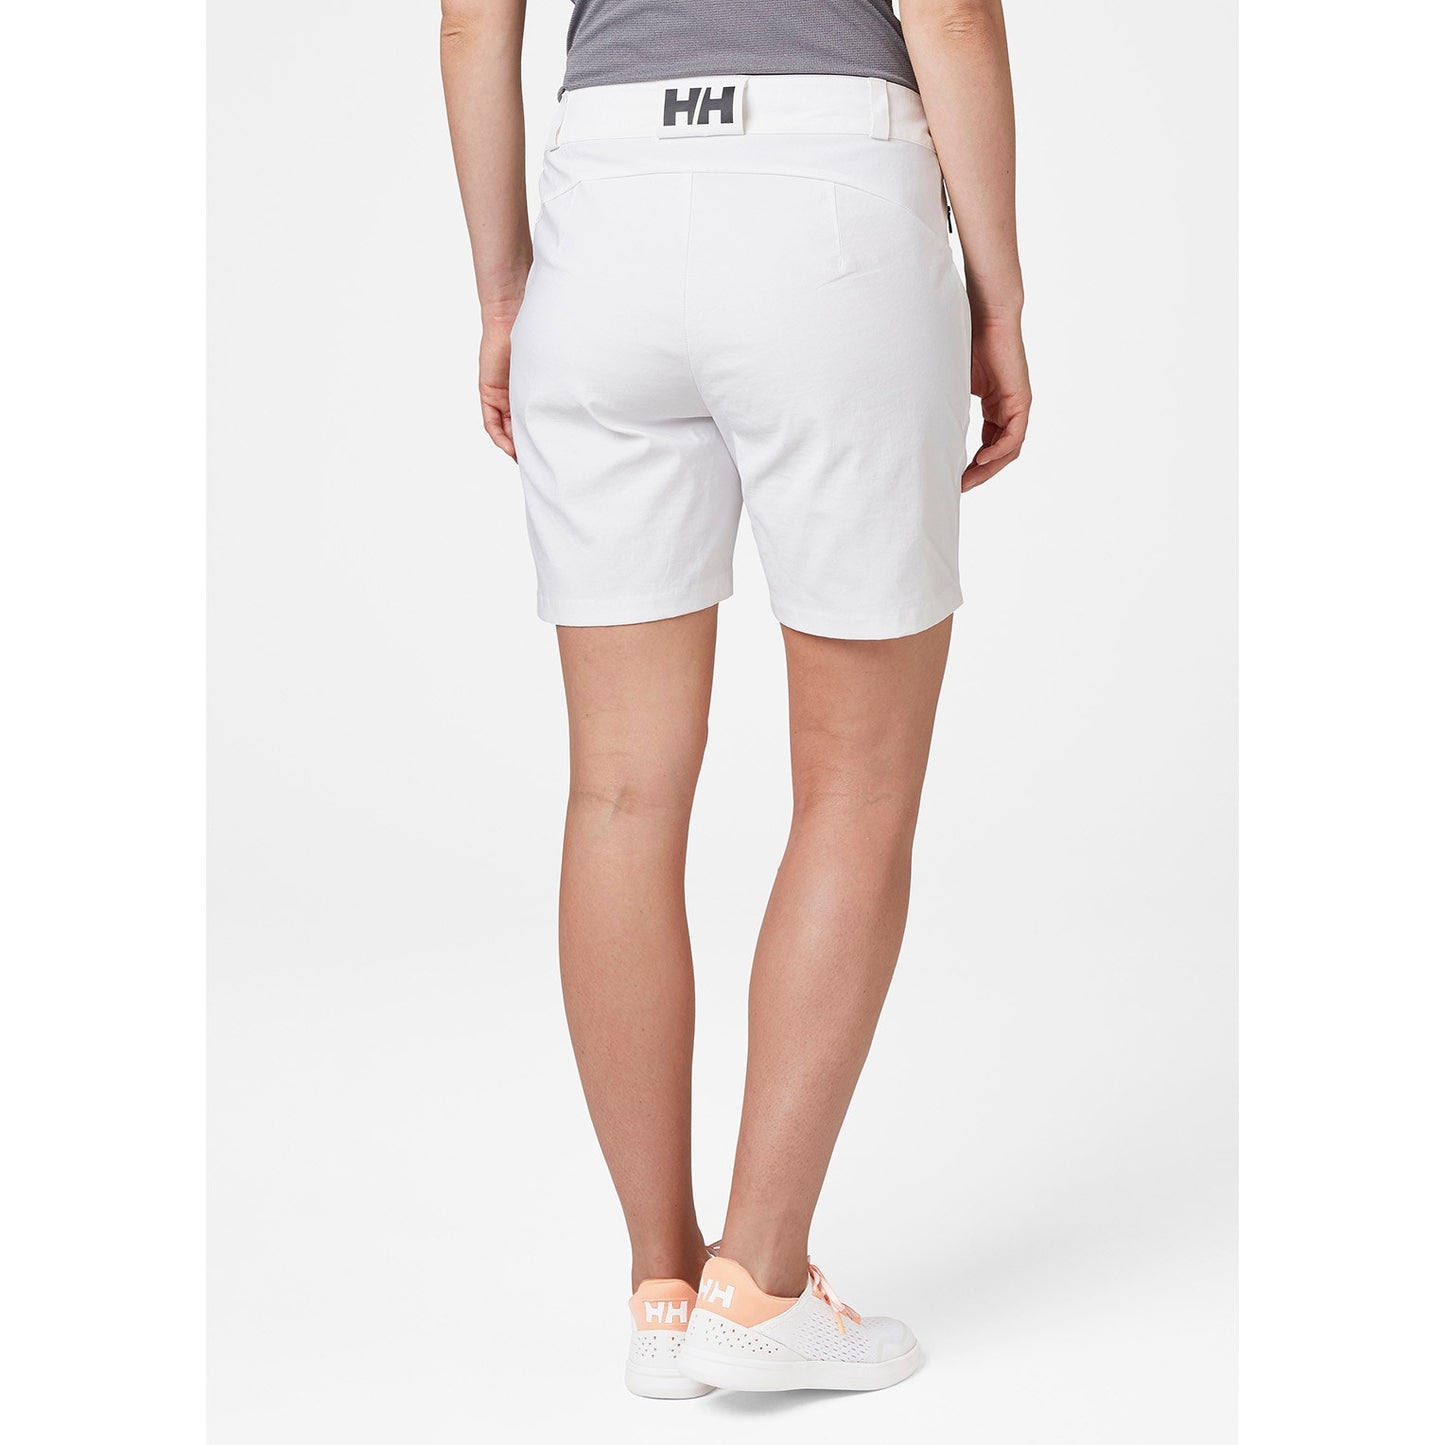 Helly Hansen Women's HP Racing Shorts White